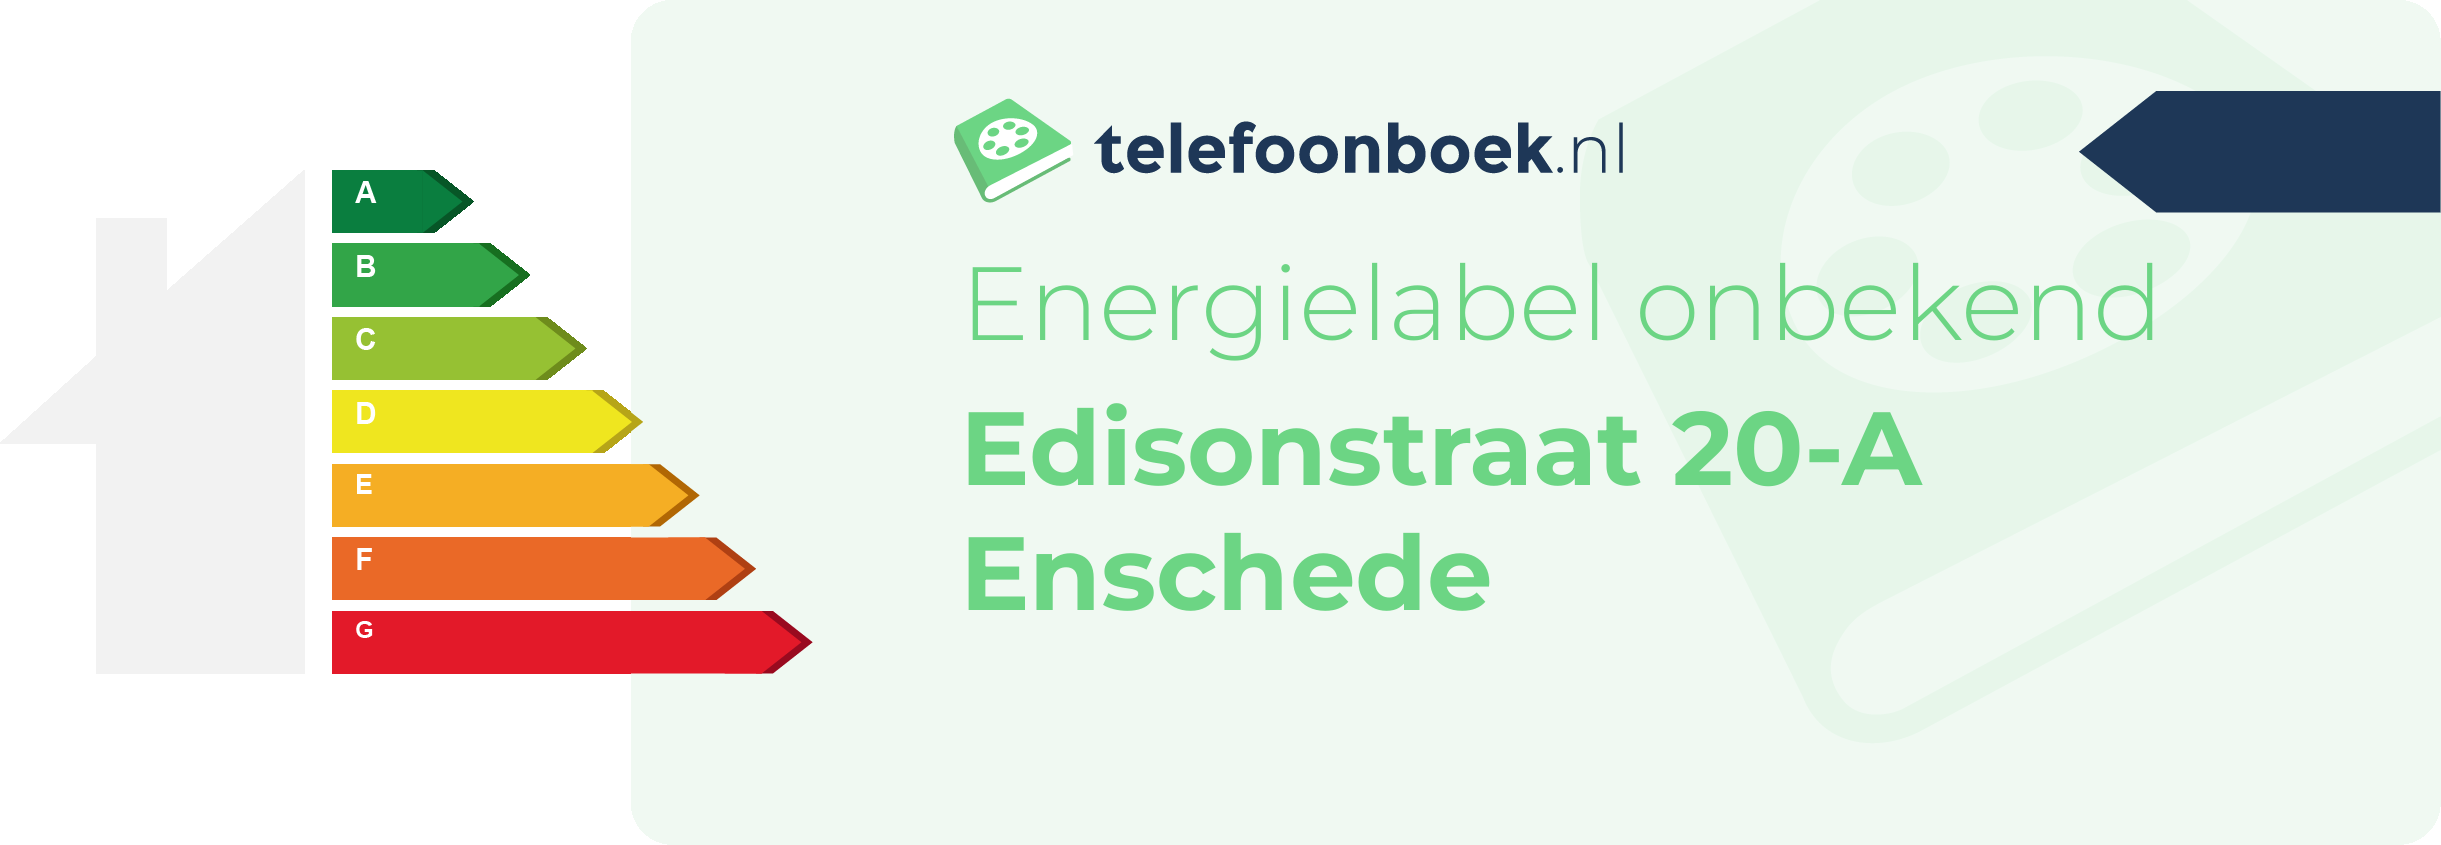 Energielabel Edisonstraat 20-A Enschede